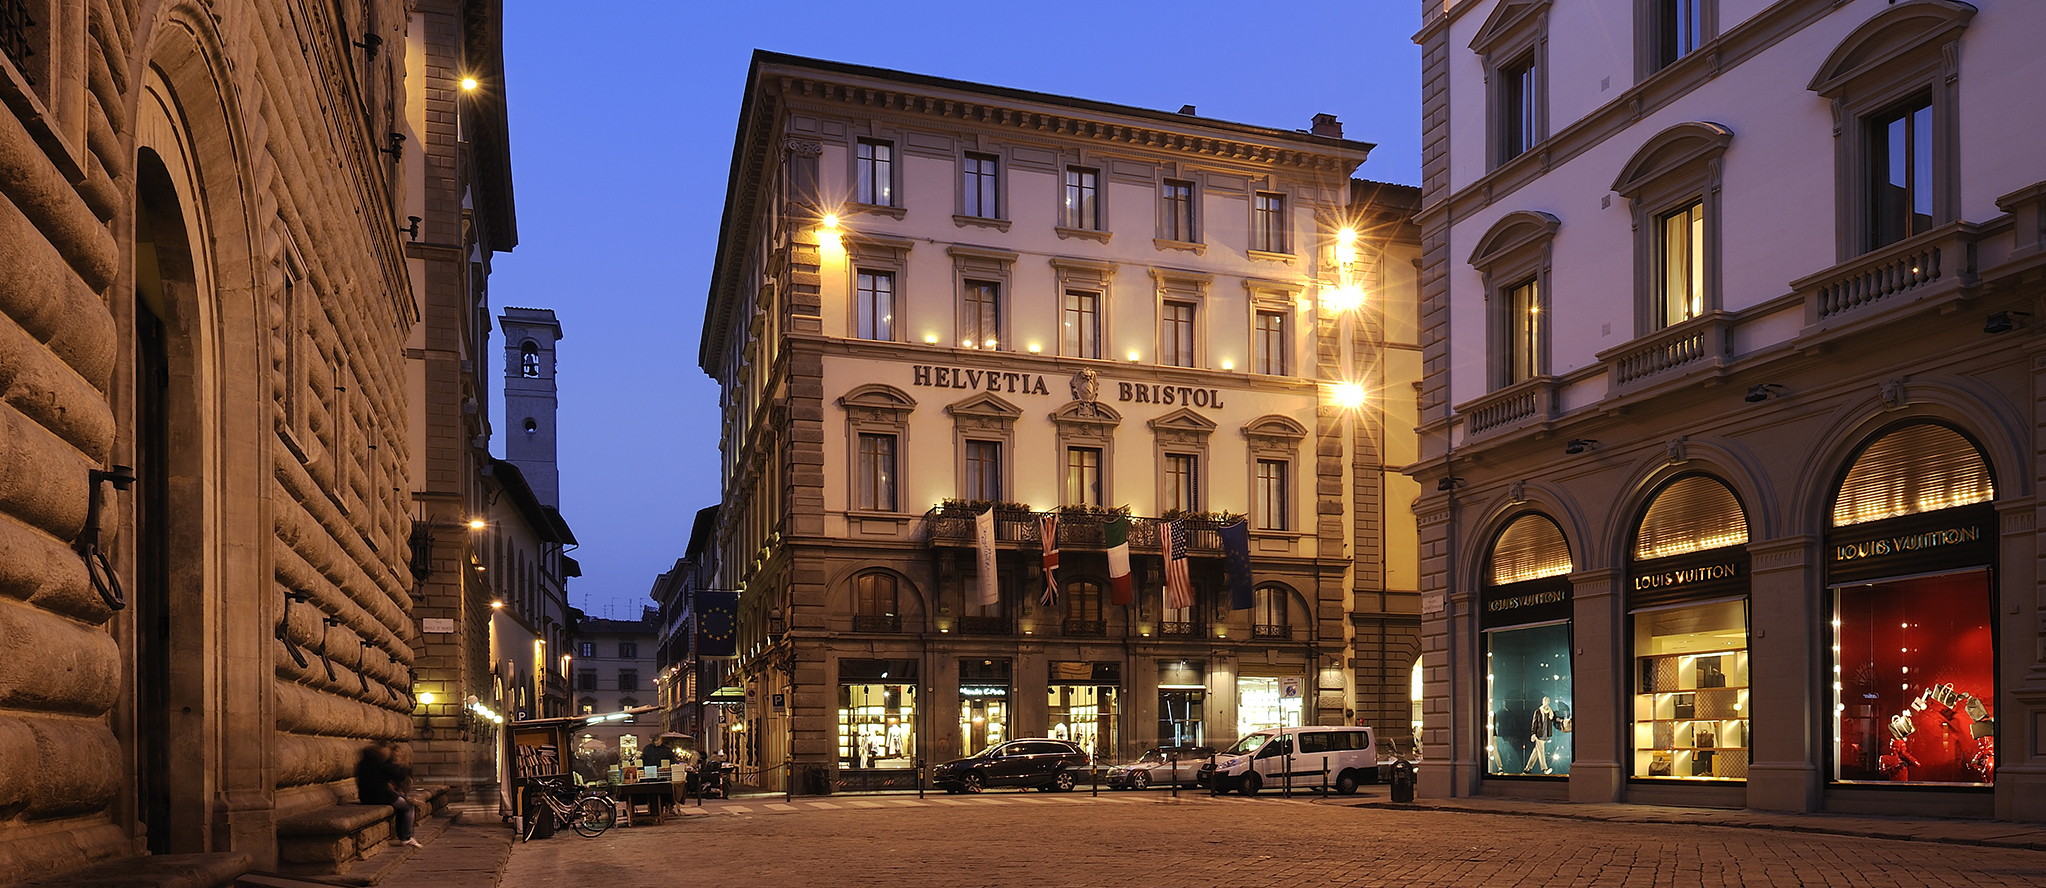 Hotel Helvetia & Bristol ***** , Florence / Italy 